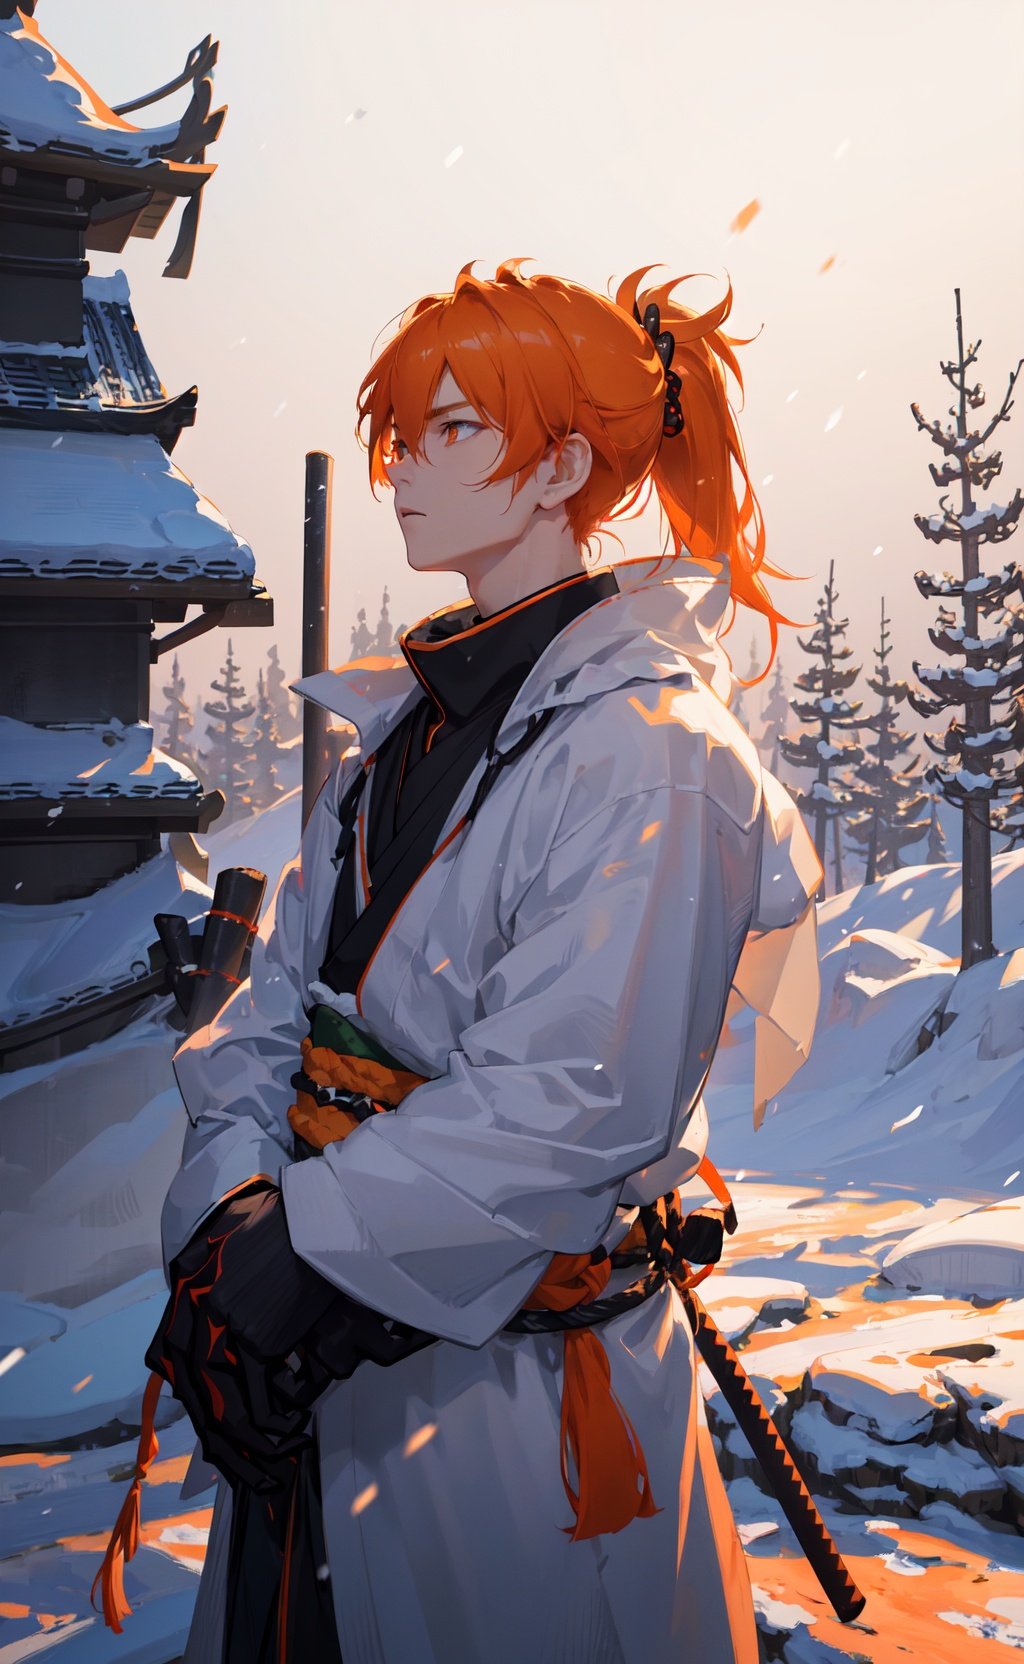 masterpiece, best quality, 1boy, samurai, short orange hair, ponytail, winter, snow, snowing, snowflakes, volumetric lighting, rim lighting